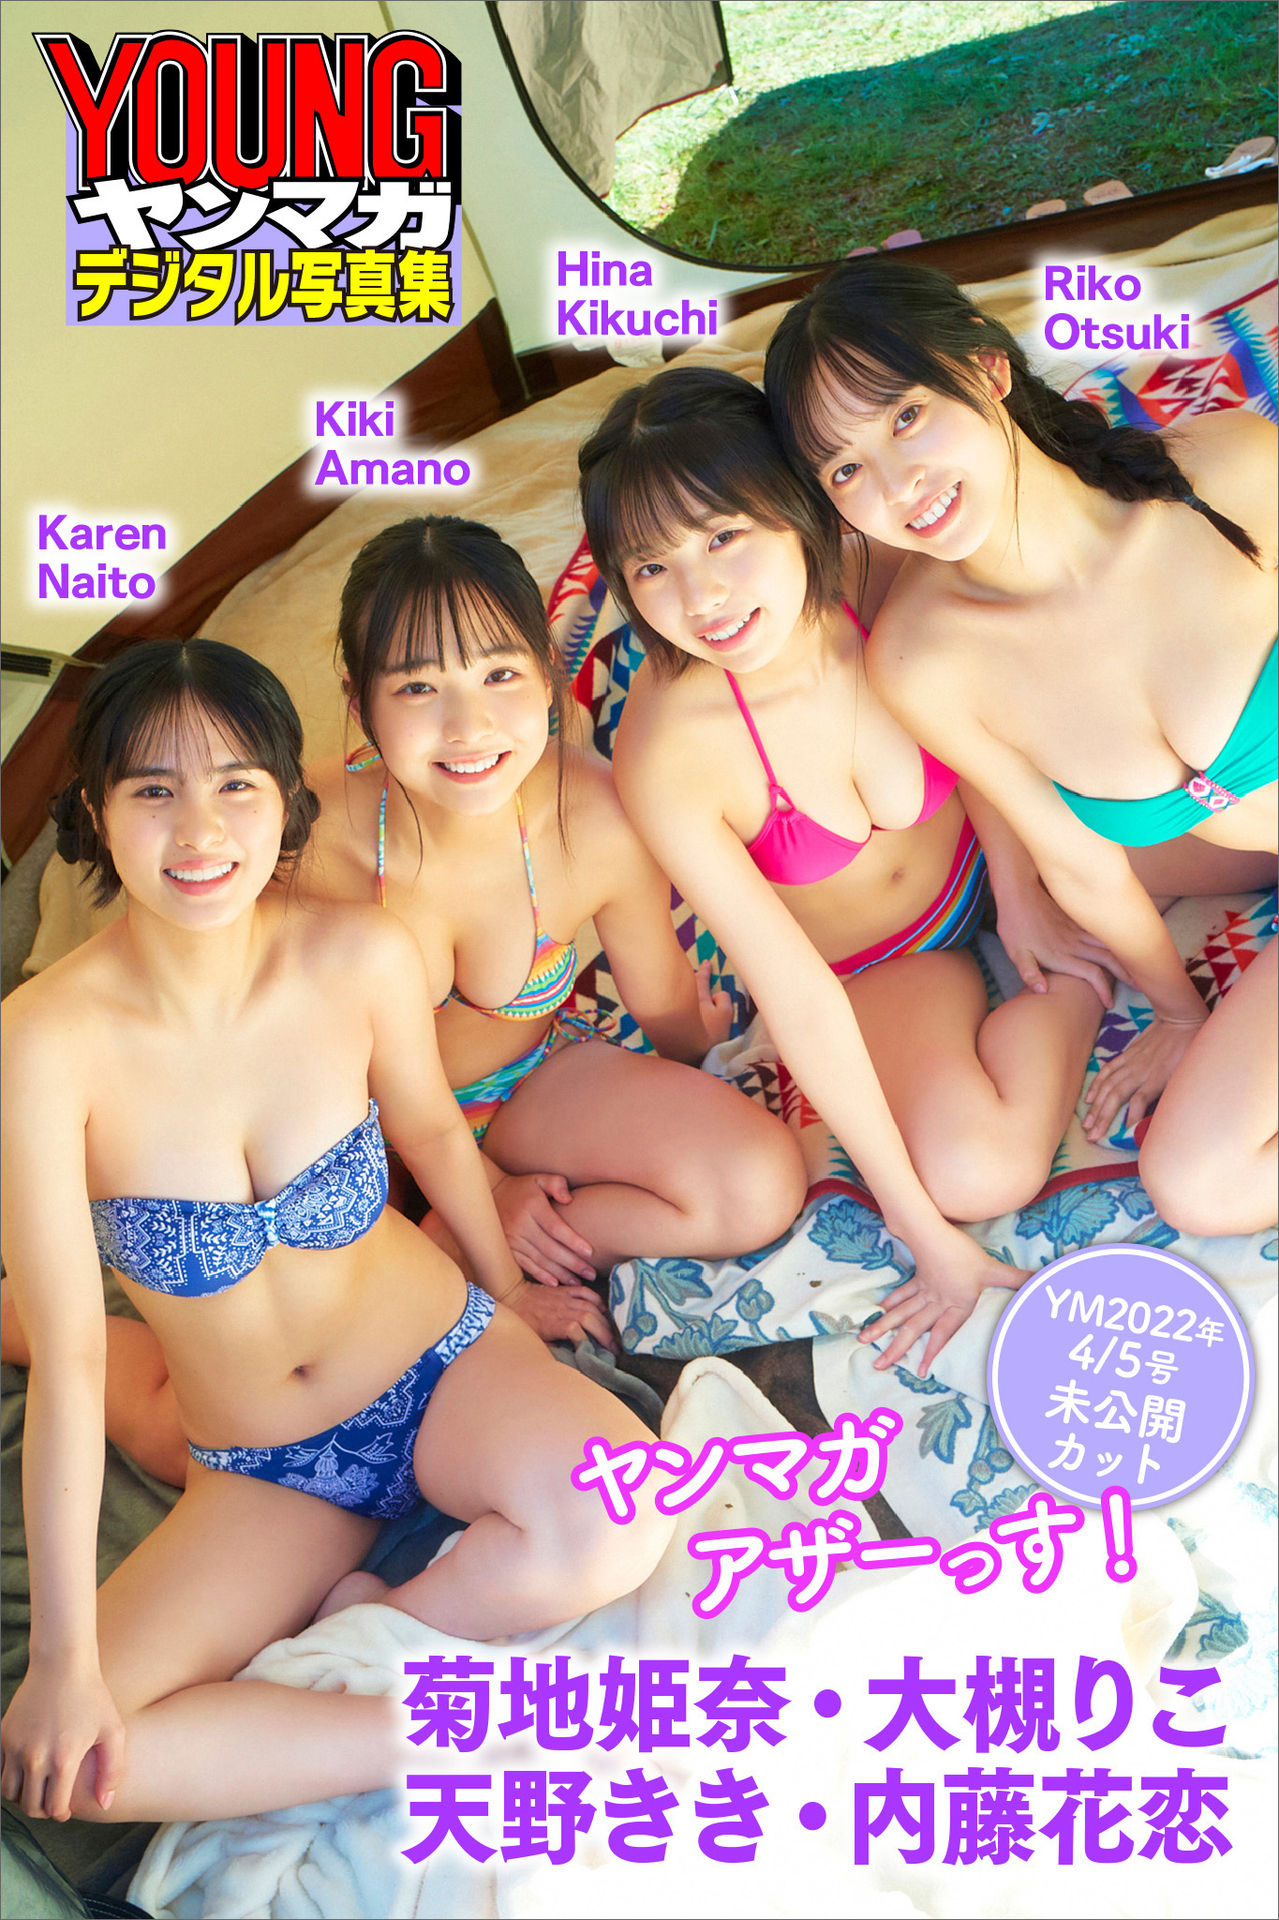 Hina Kikuchi, Riko Otsuki, Kiki Amano, Karen Naito, Young Magazine Other! (YM 2022 April 5 Issue unreleased cut)